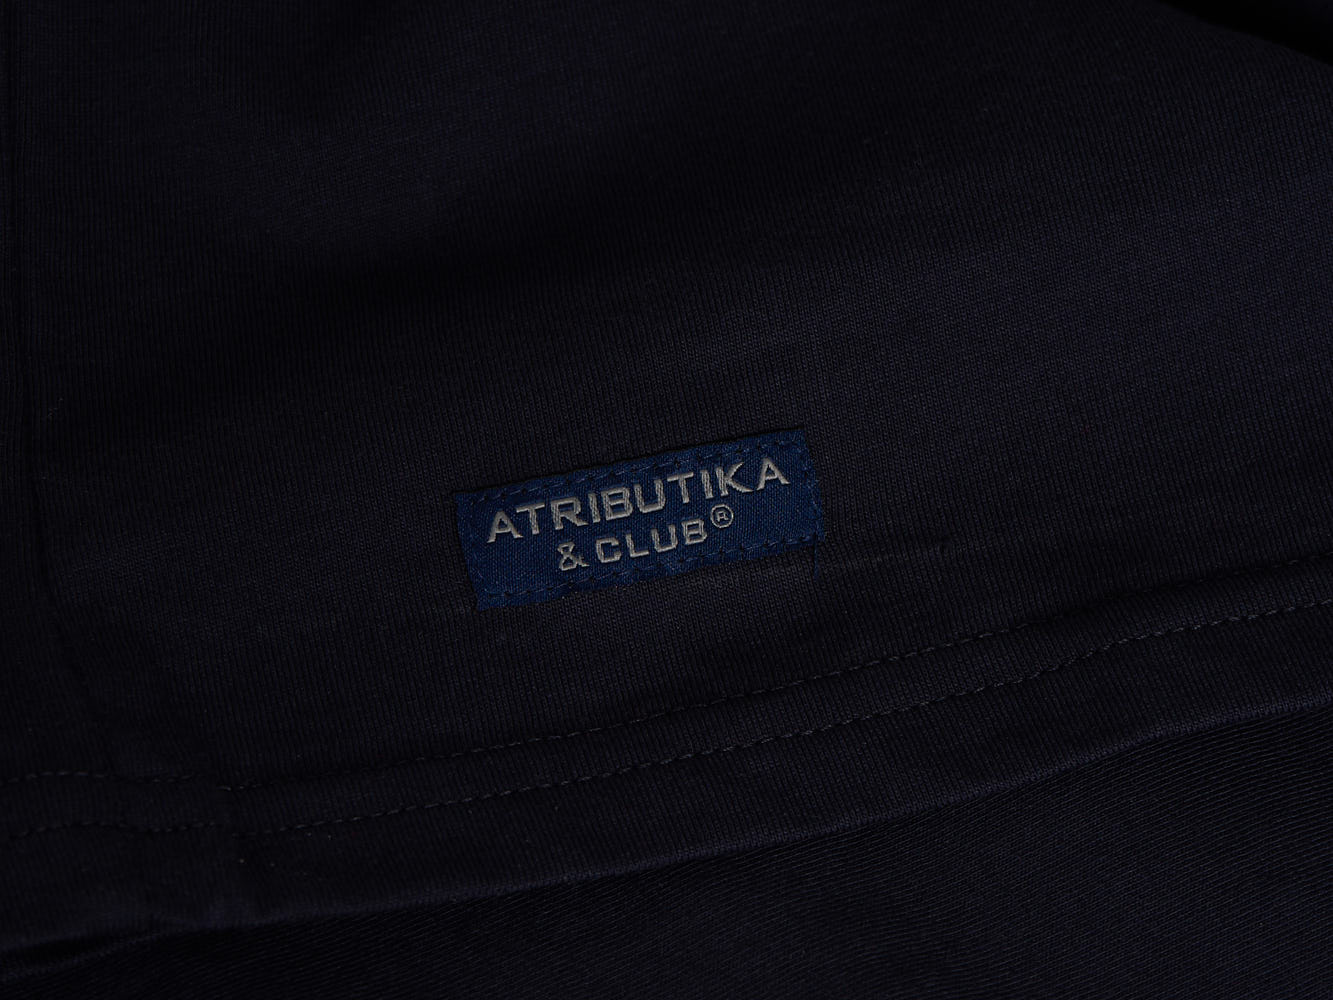  Atributika & club    739010 SR